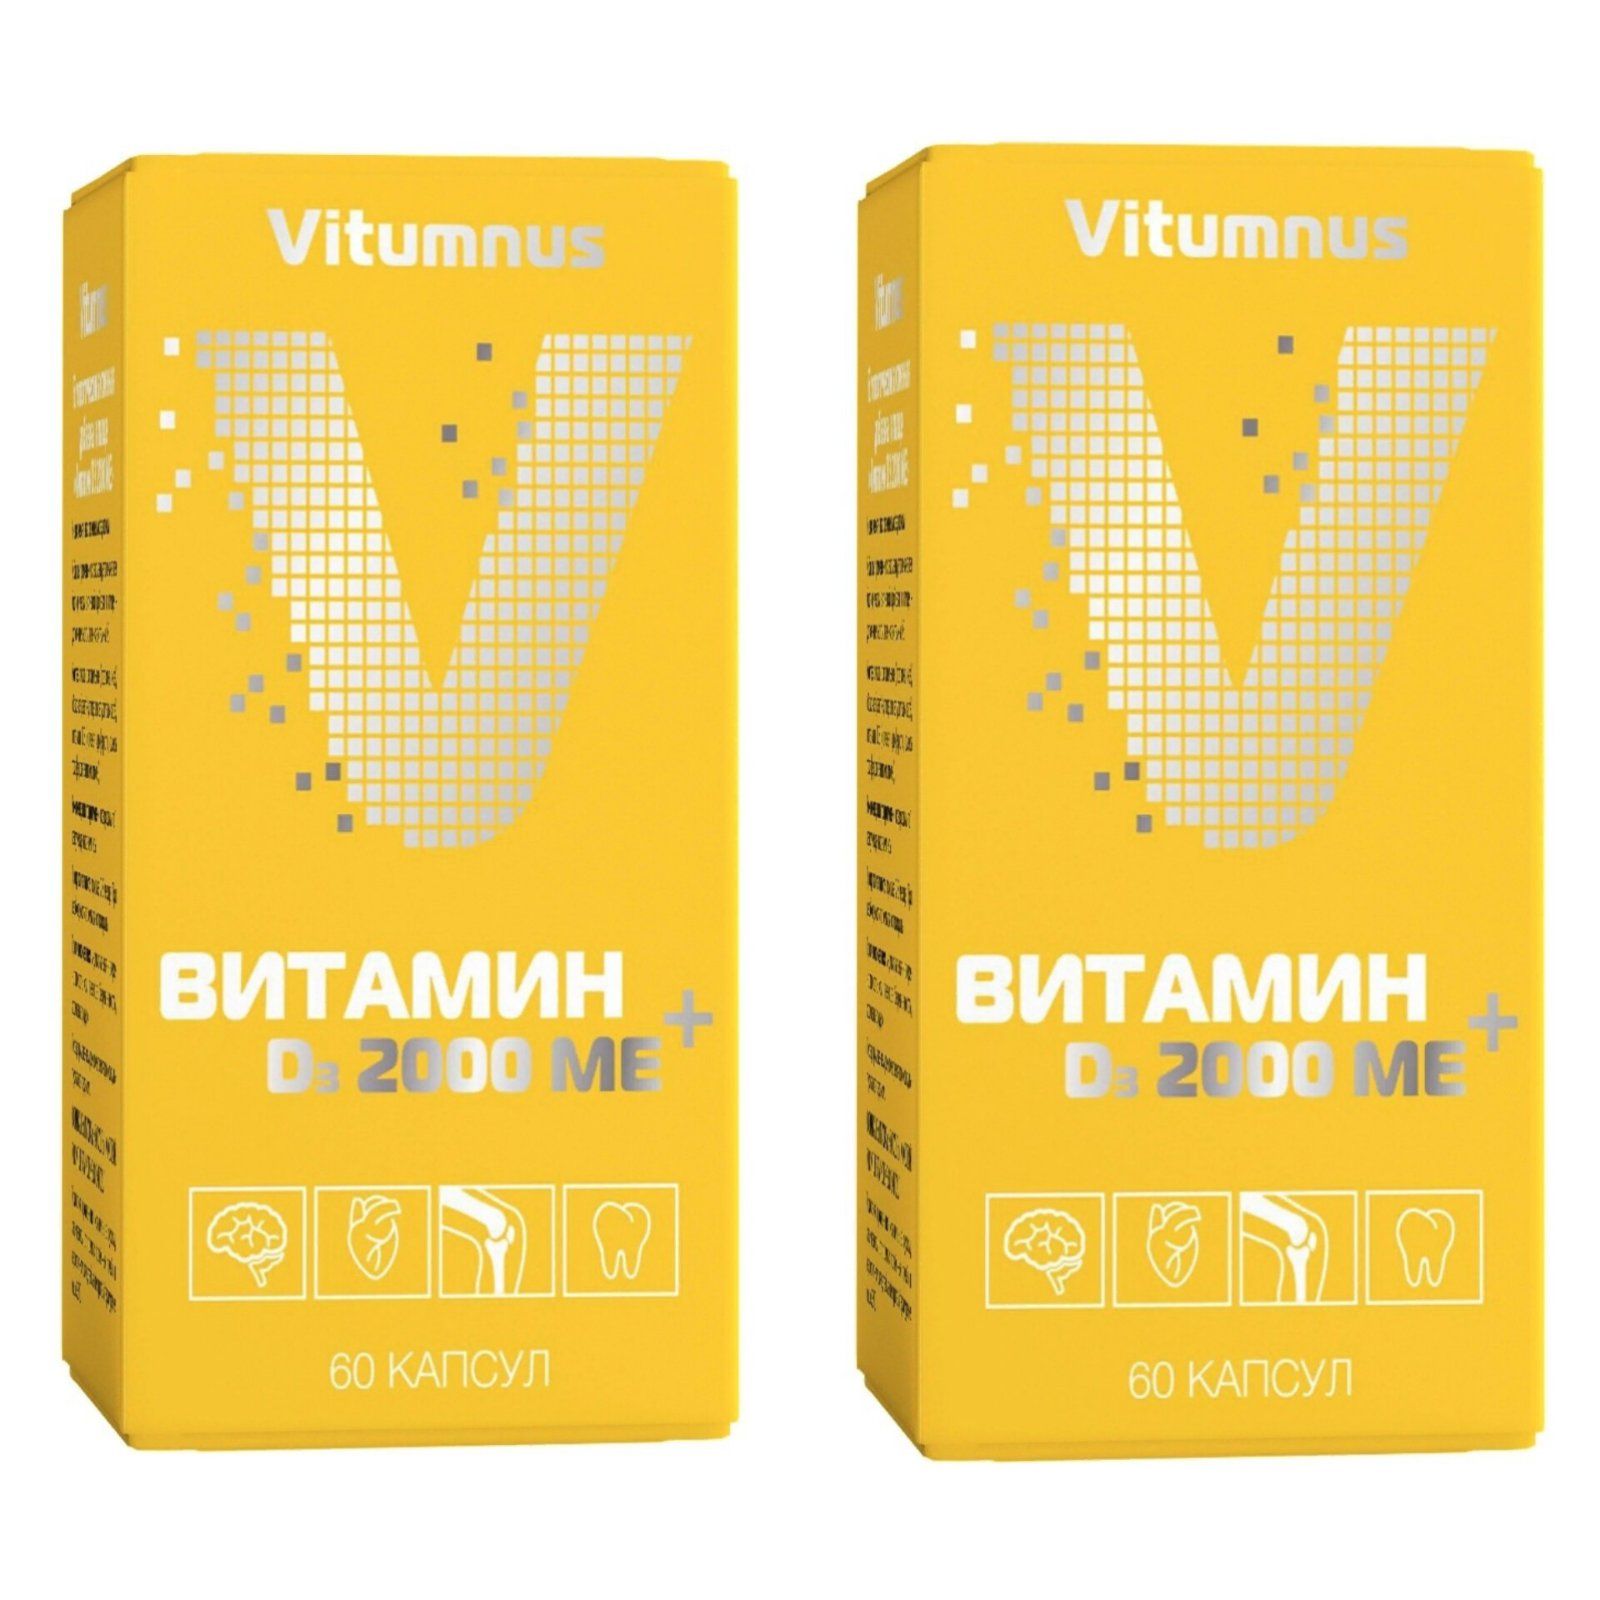 Vitumnus д3 витамин. Витамин д3 Vitumnus. Витамин д 2000ме Vitumnus. Vitumnus витамин д3 2000ме капсулы №120. Vitumnus витамины d3 2000.